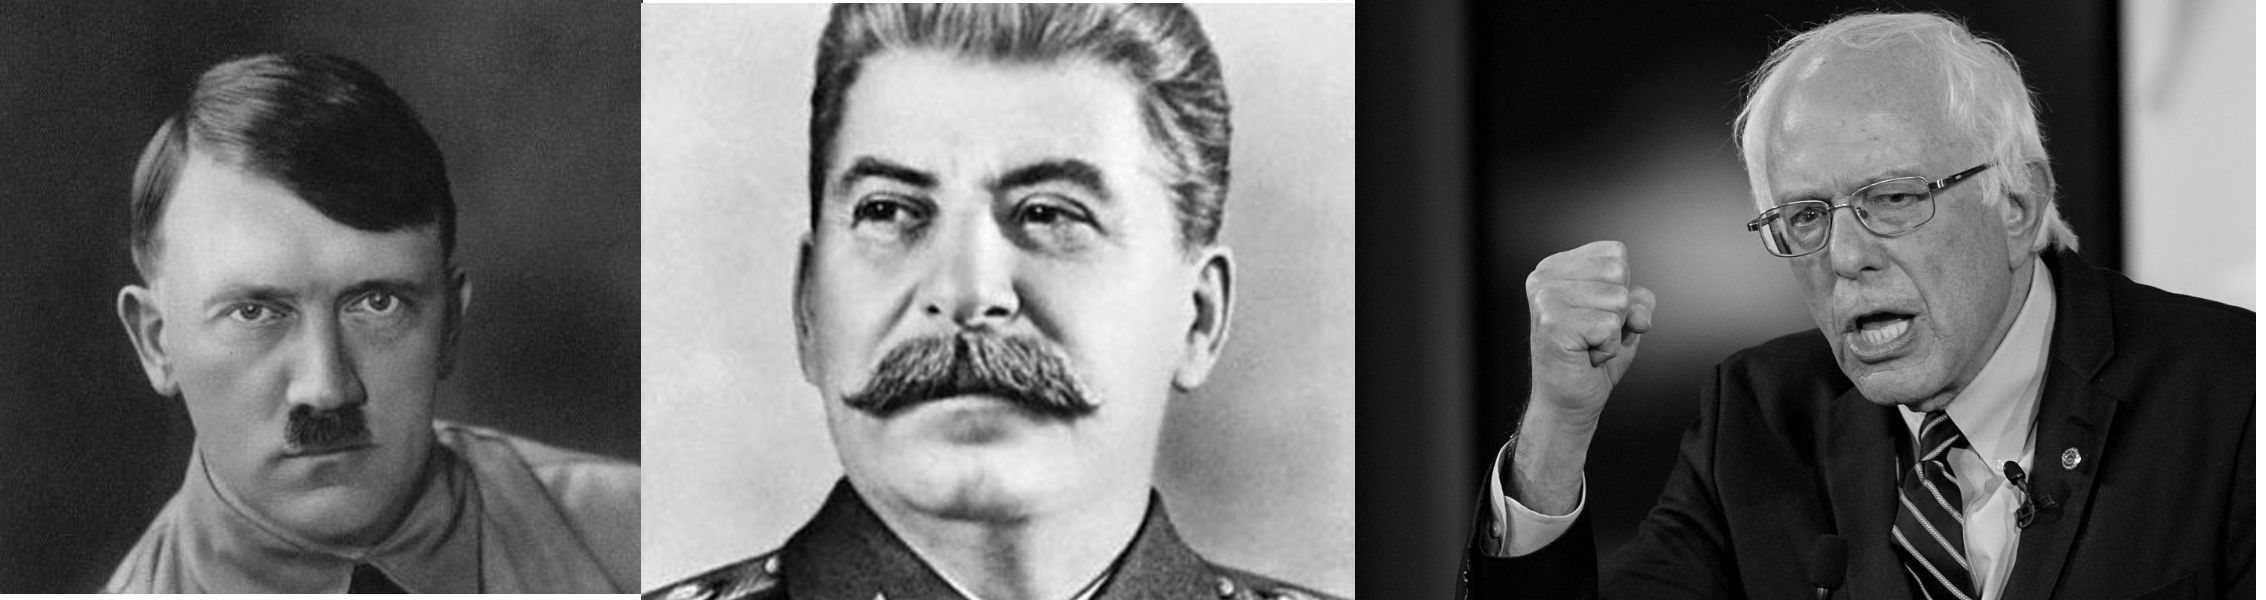 Hitler, Stalin, and Sanders Blank Meme Template